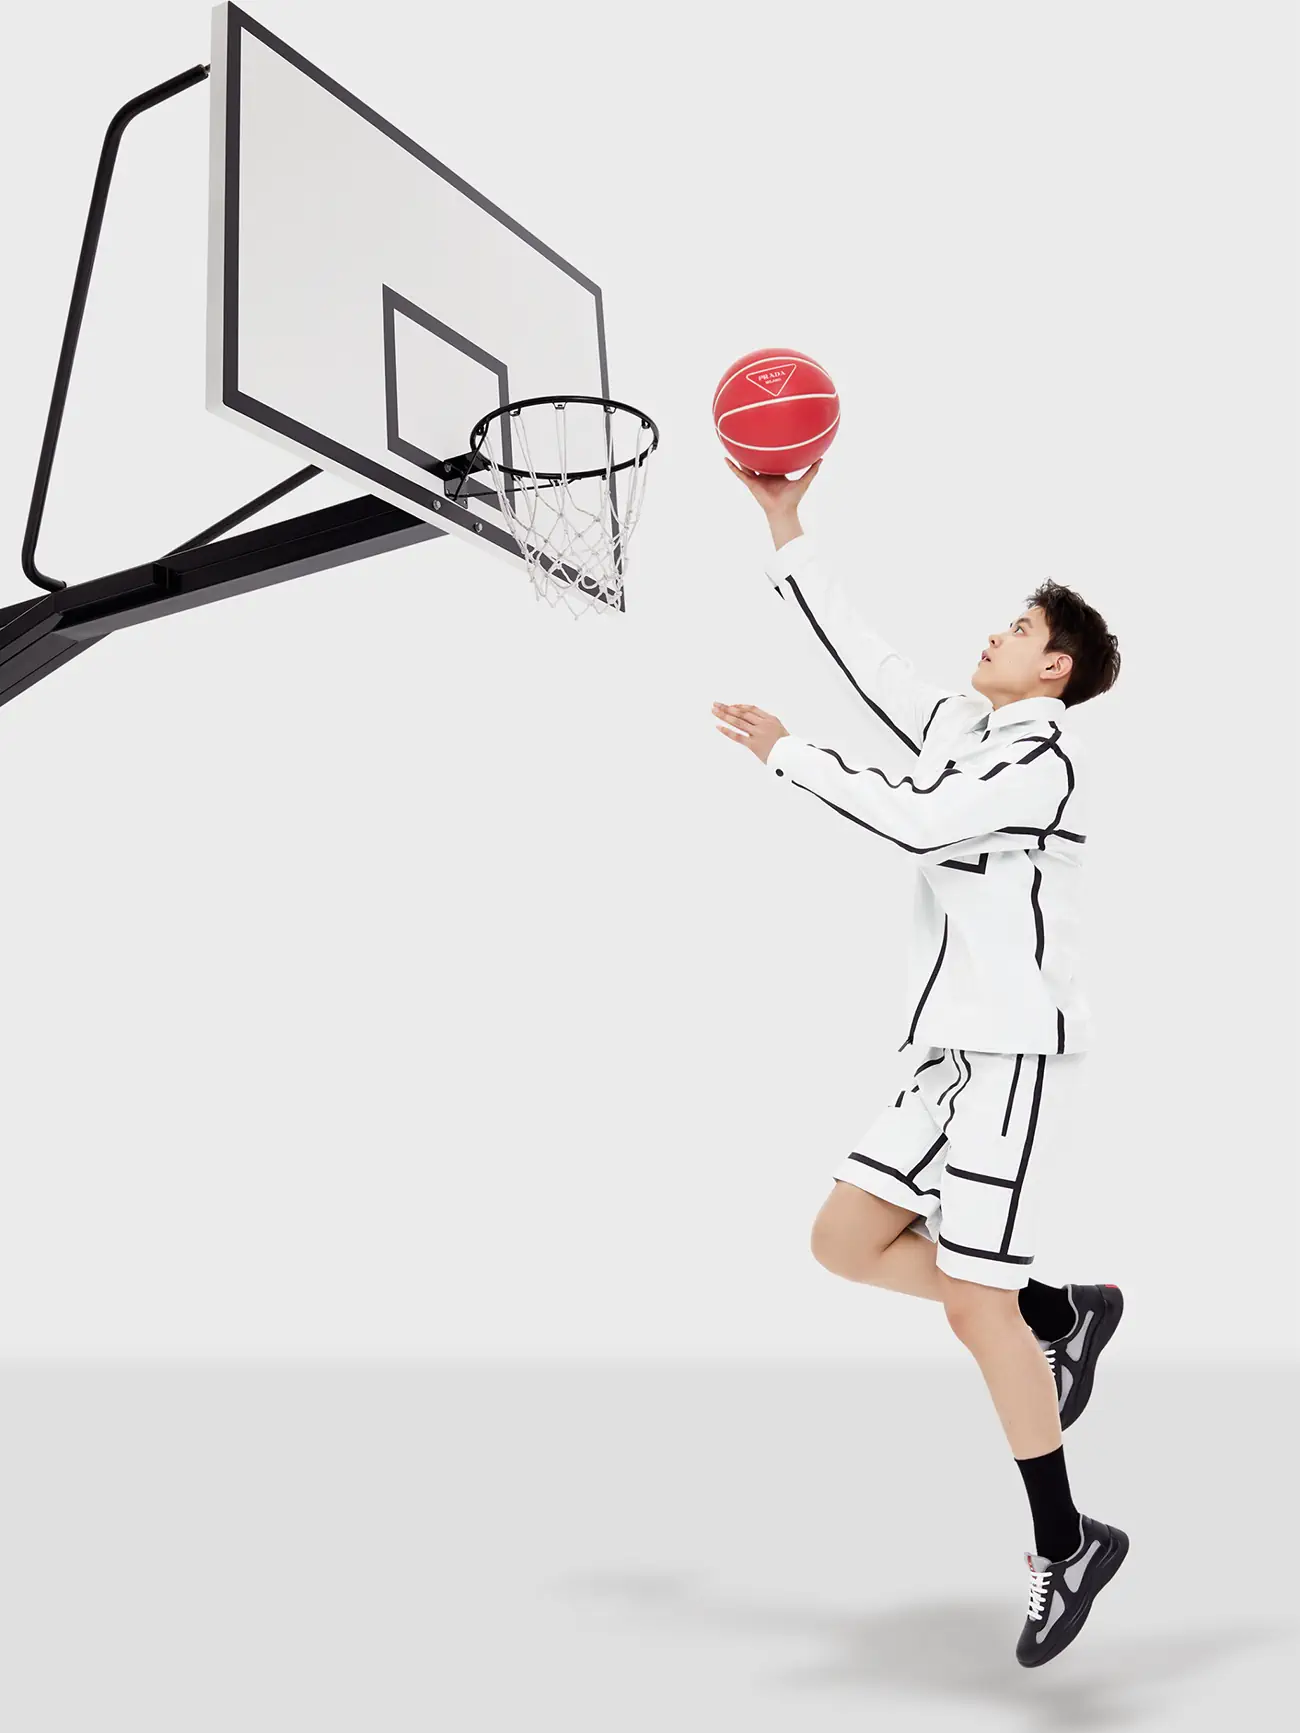 Chinese basketball star Shuyu Yang named as Prada's newest brand ambassador